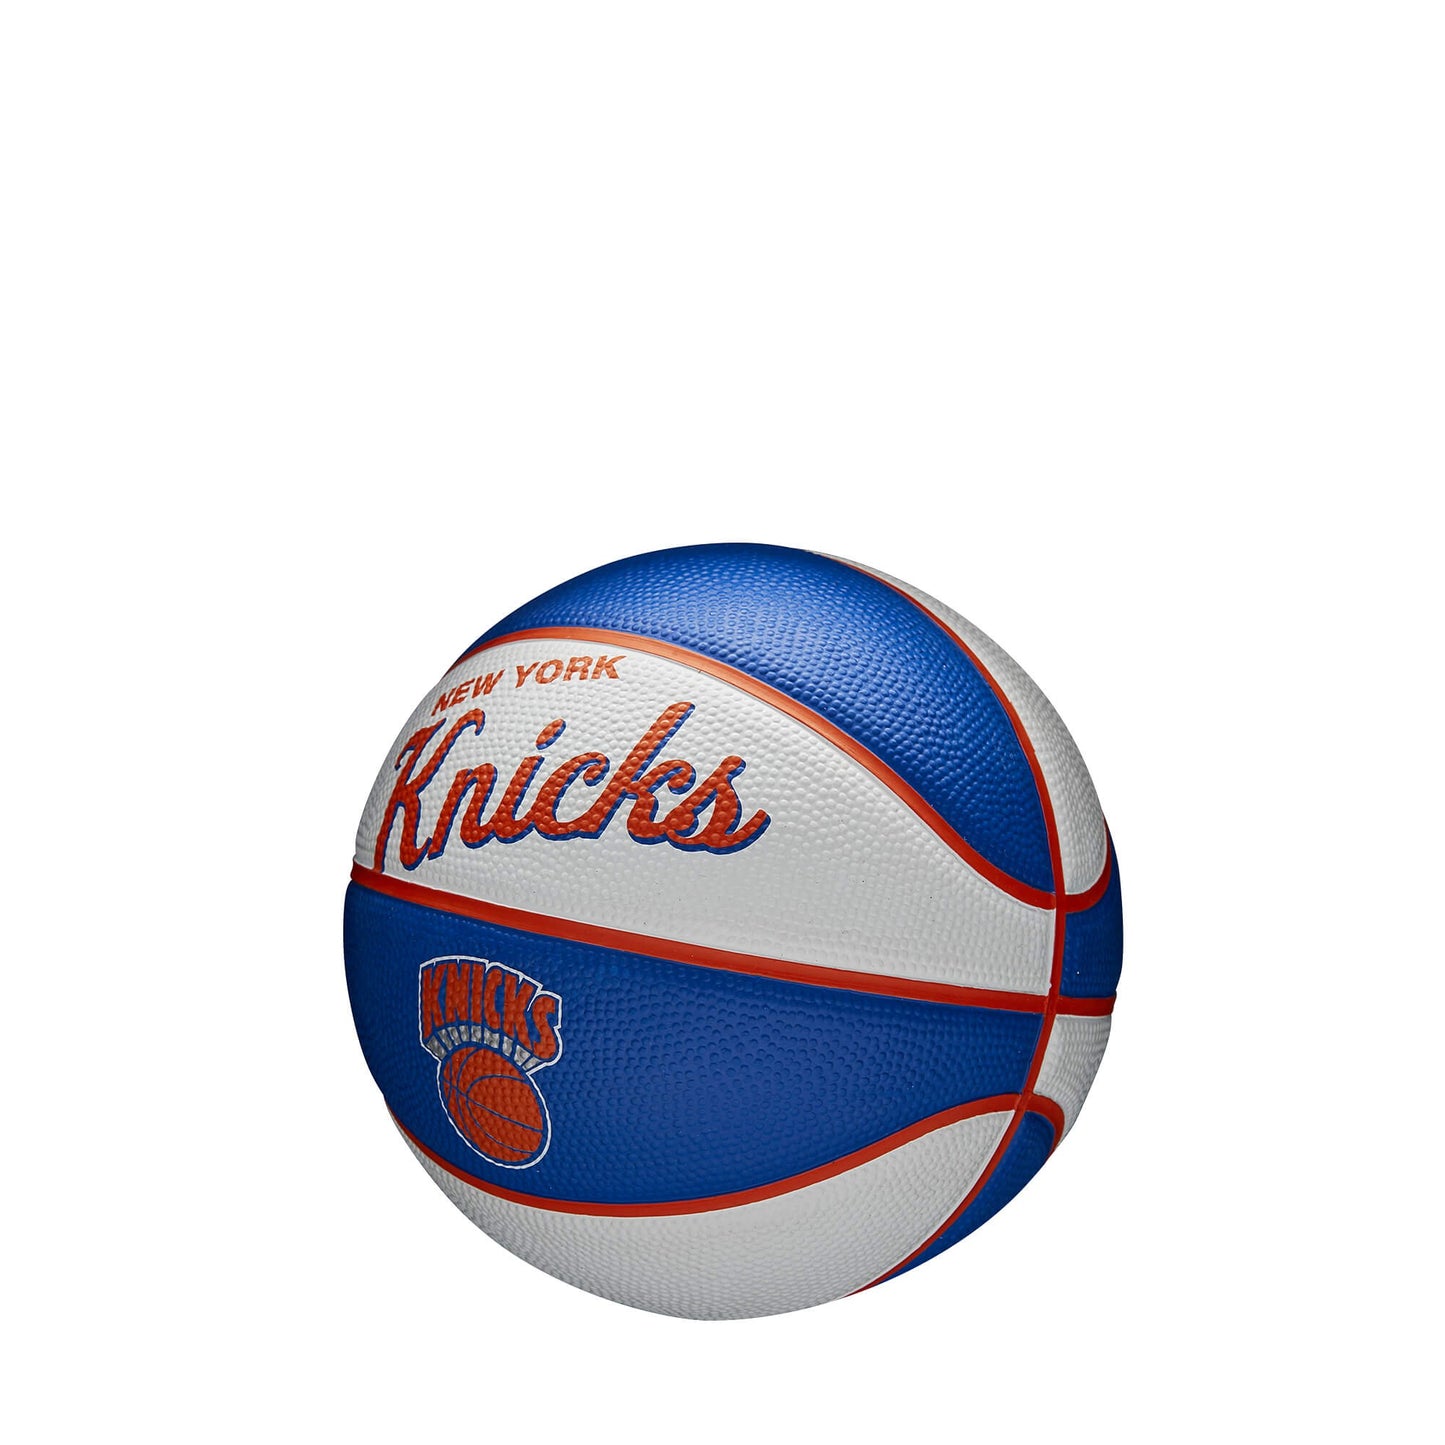 Wilson NBA Team Retro Mini Basketball New York Knicks (sz. 3)